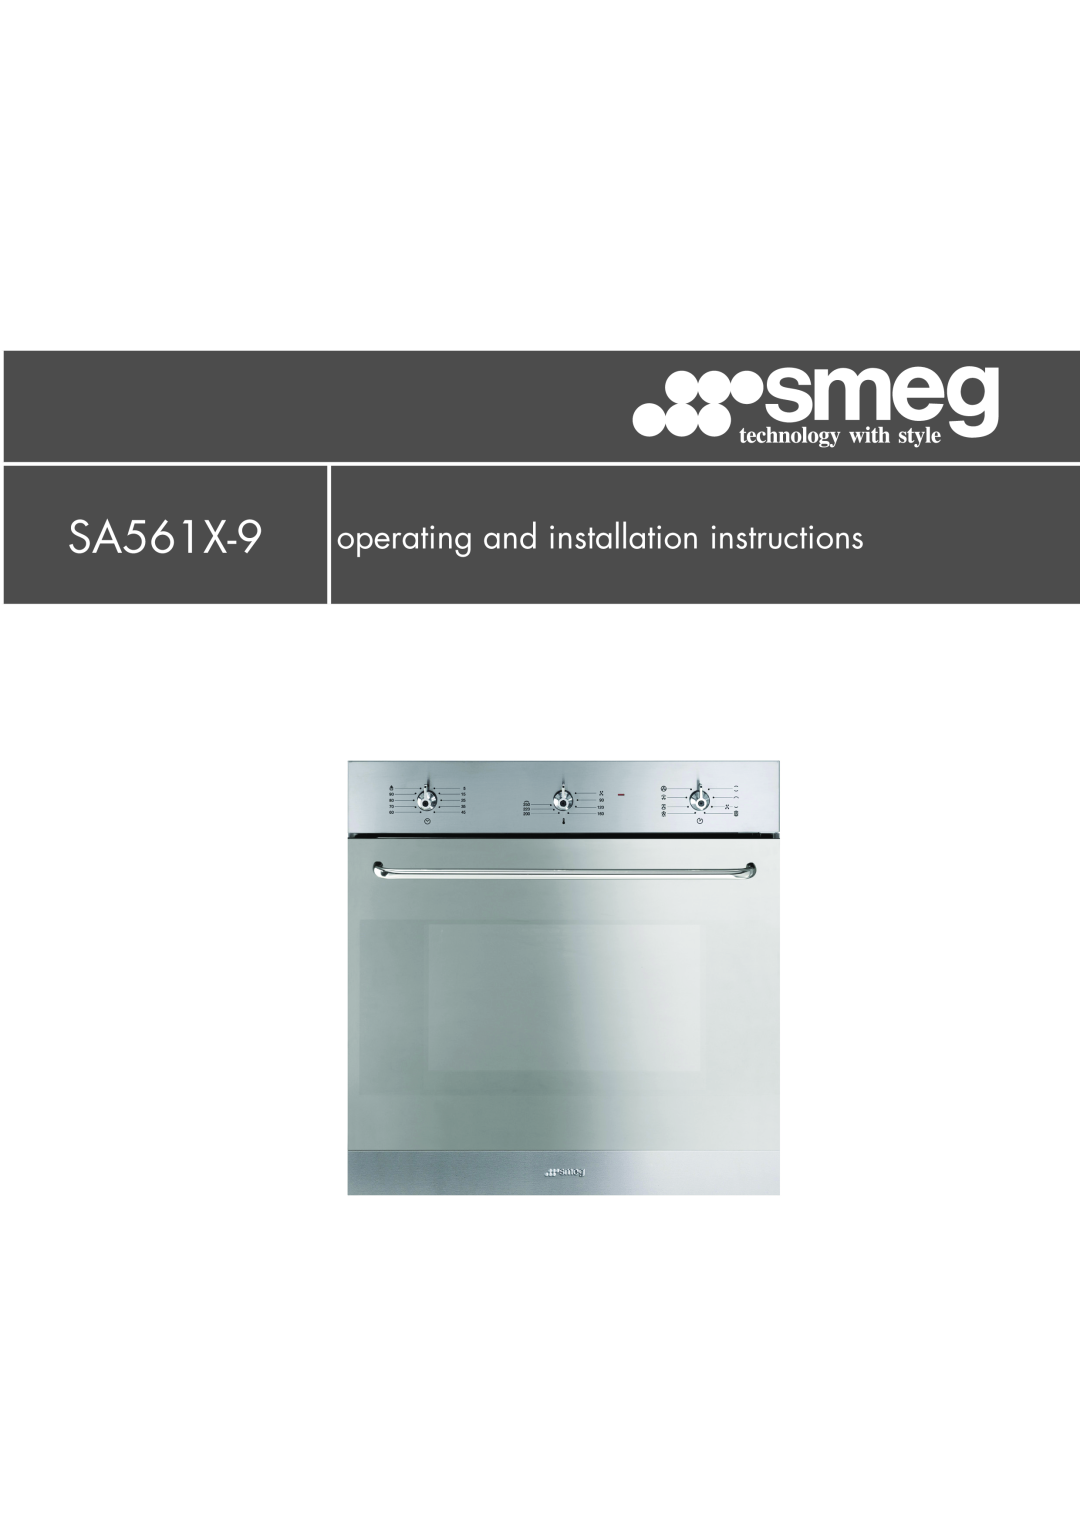 Smeg SA561X-9 installation instructions operating and installation instructions 